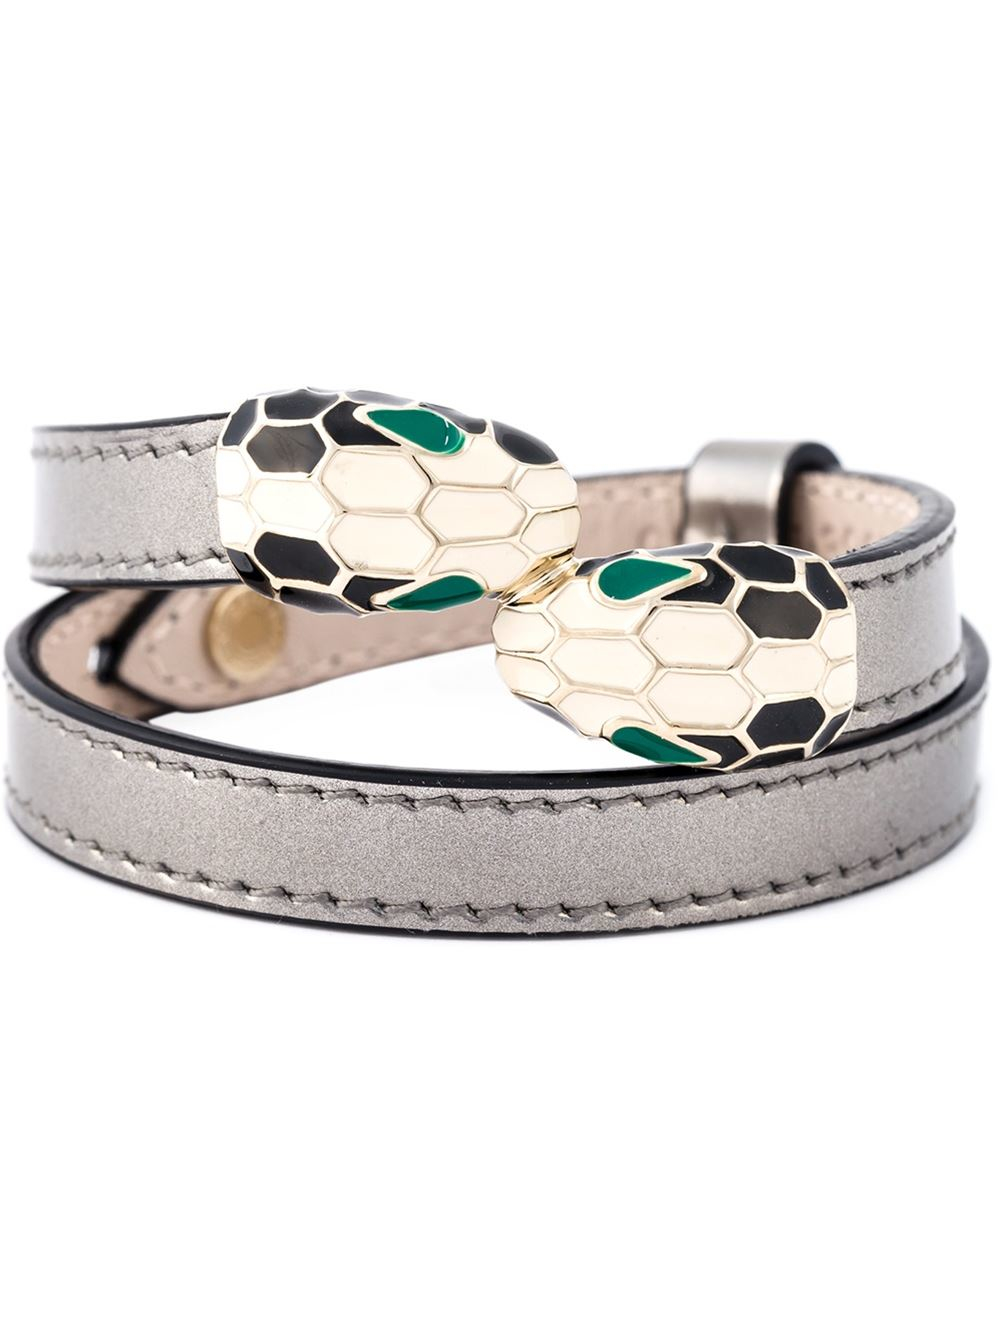 bvlgari serpenti bracelet leather